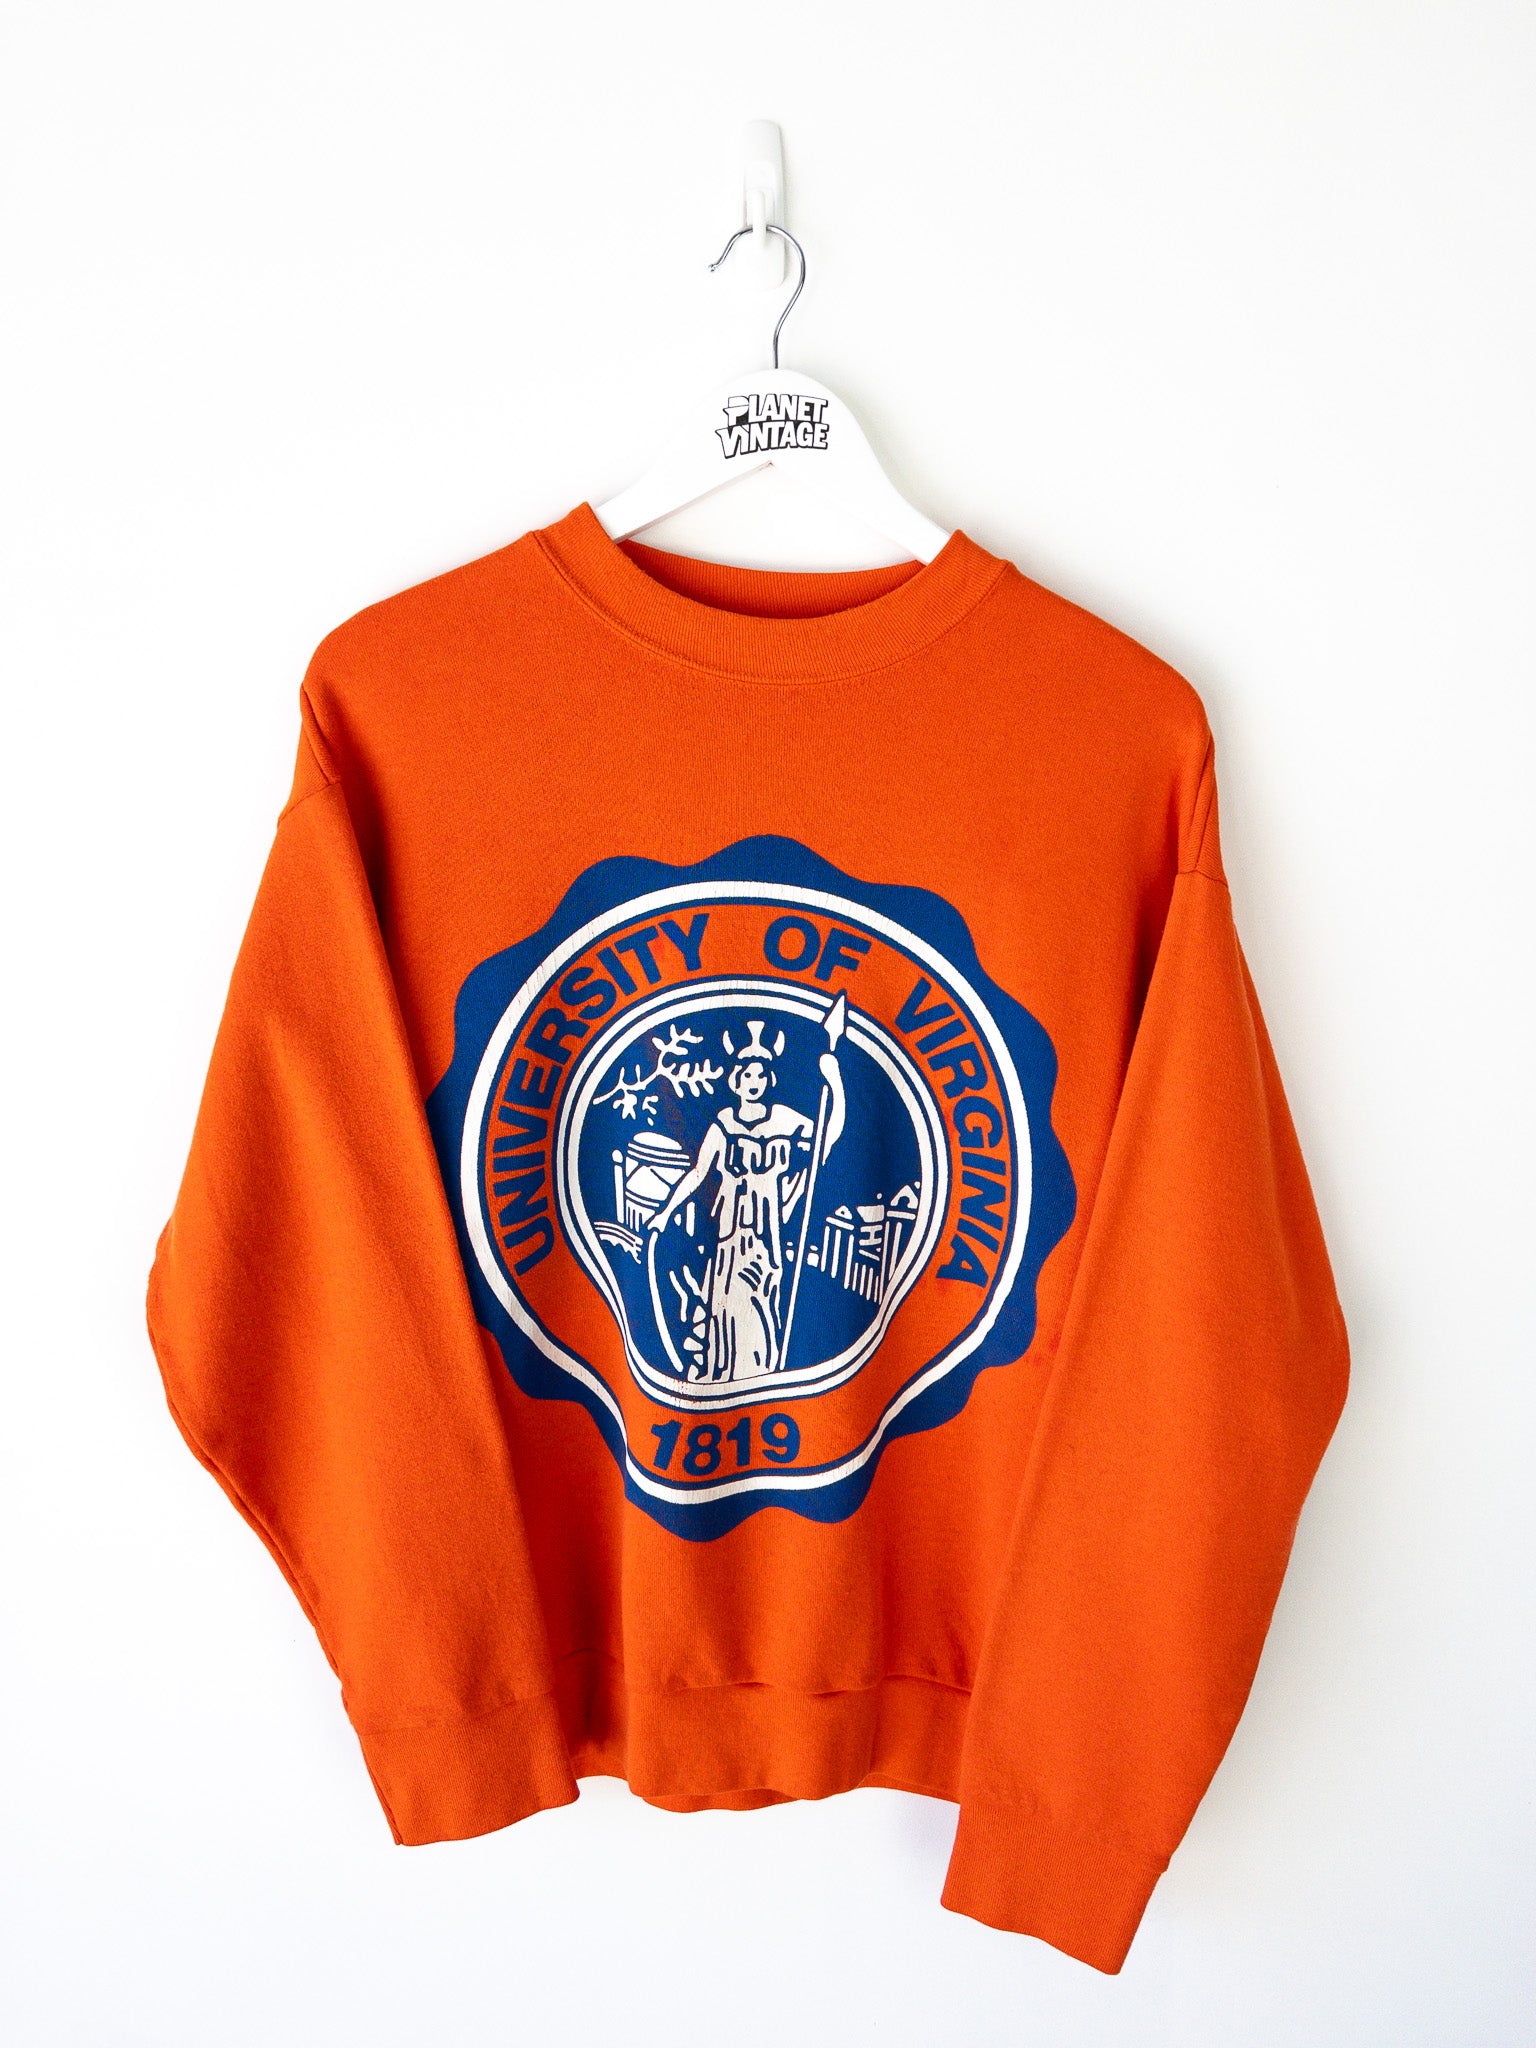 Vintage University Of Virginia Sweatshirt (M)